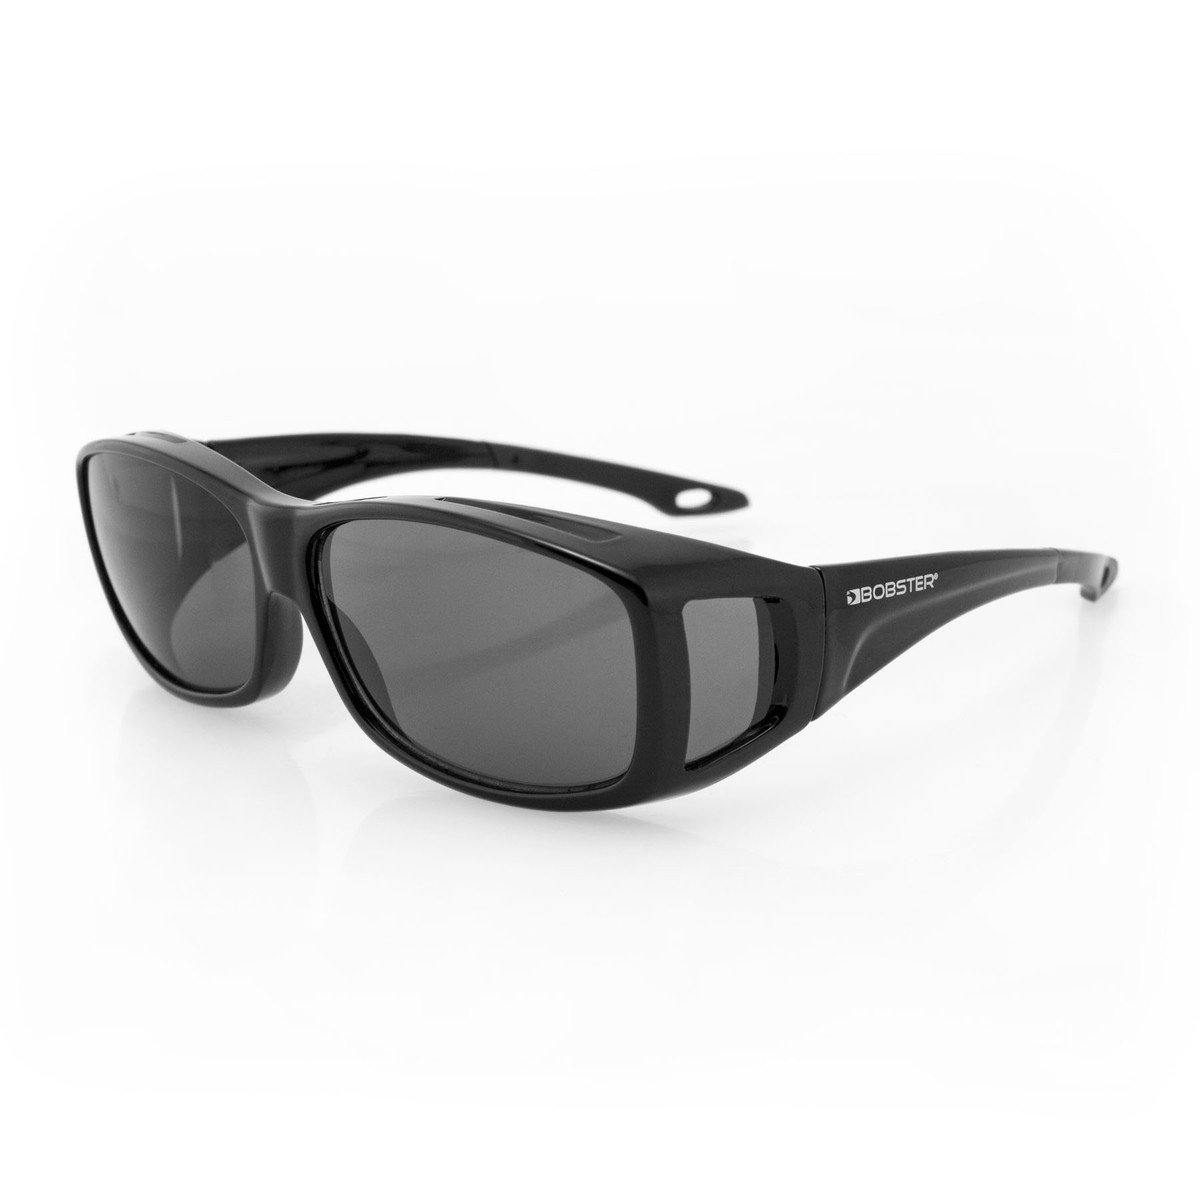 Bobster Condor 2 Sunglasses - American Legend Rider